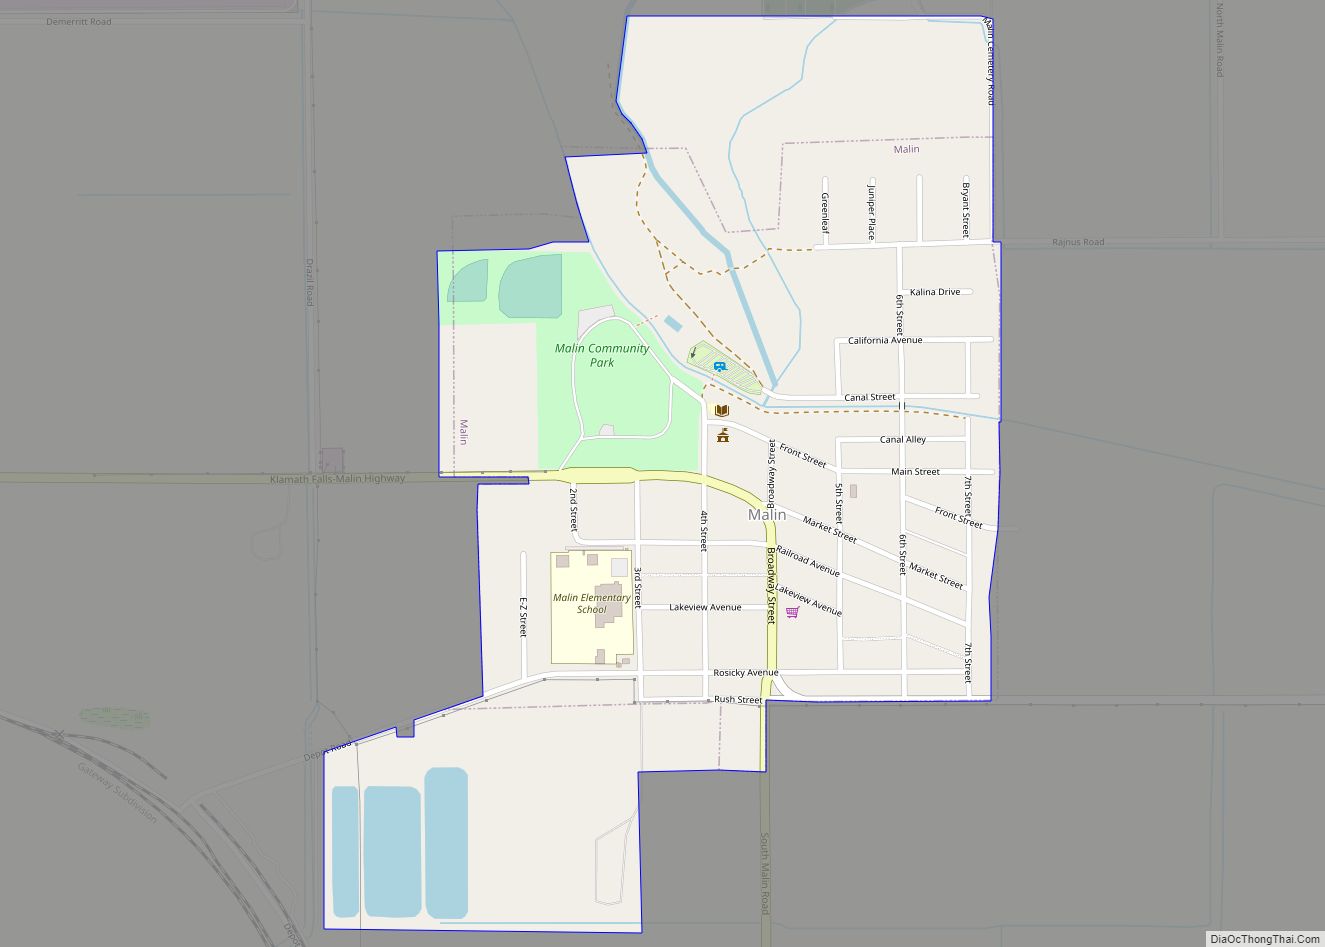 Map of Malin city